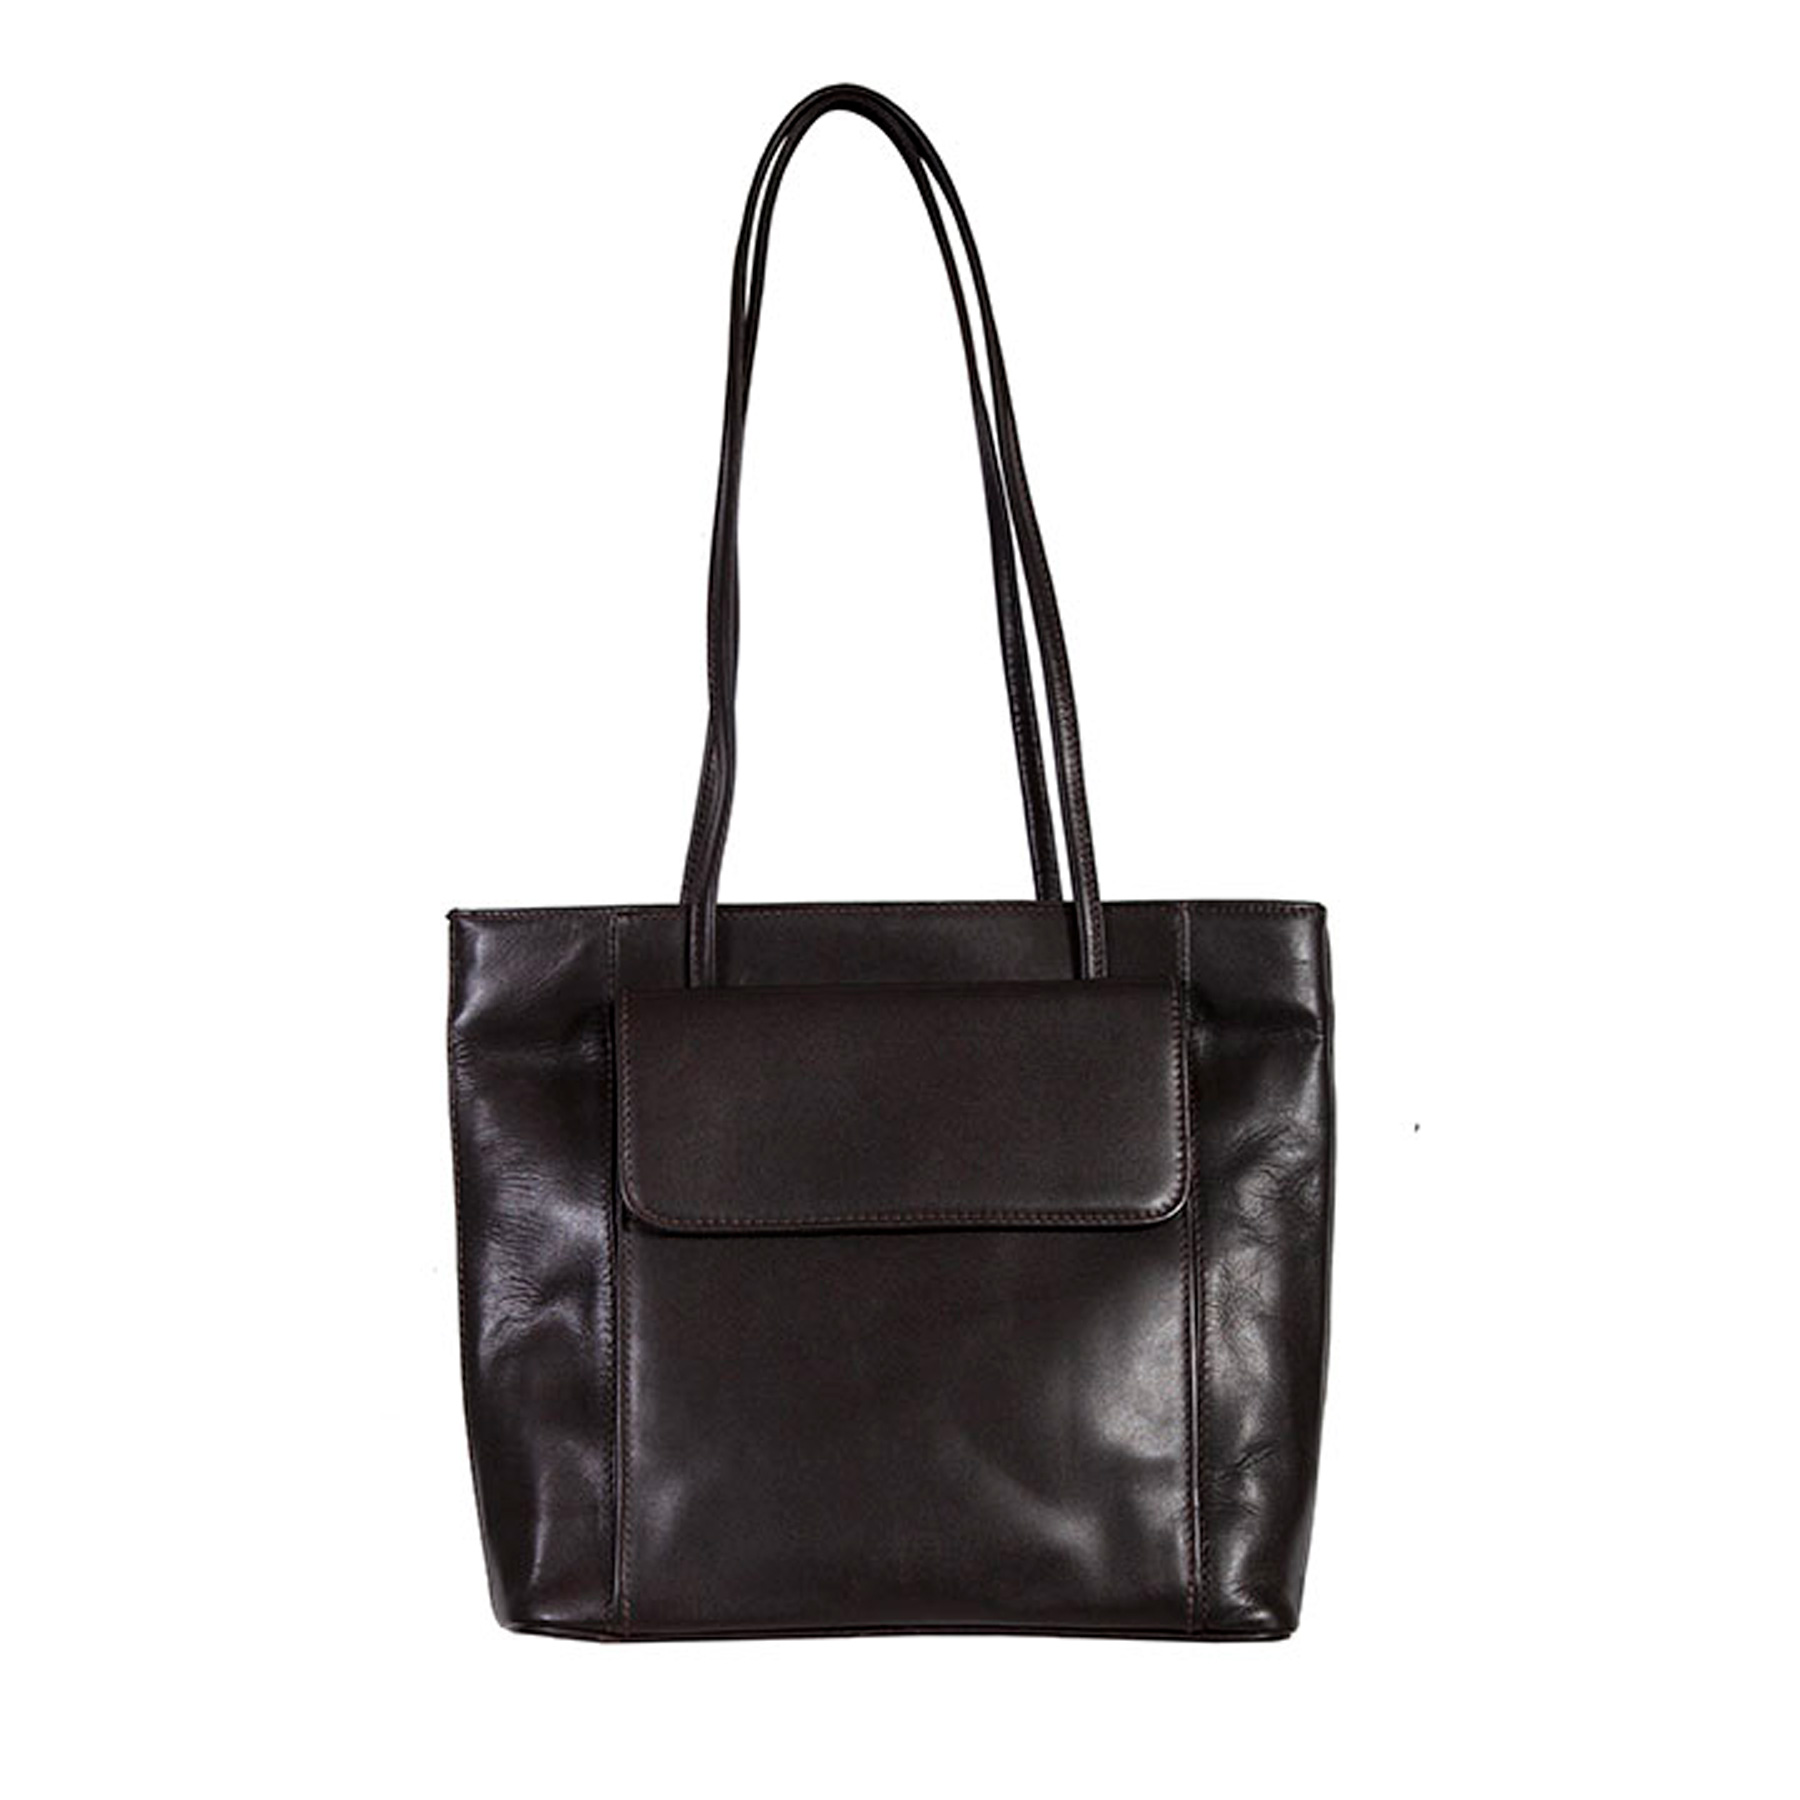 Pungo Ridge - Scully Leather Handbag - Chocolate, Scully Handbags, 501 ...